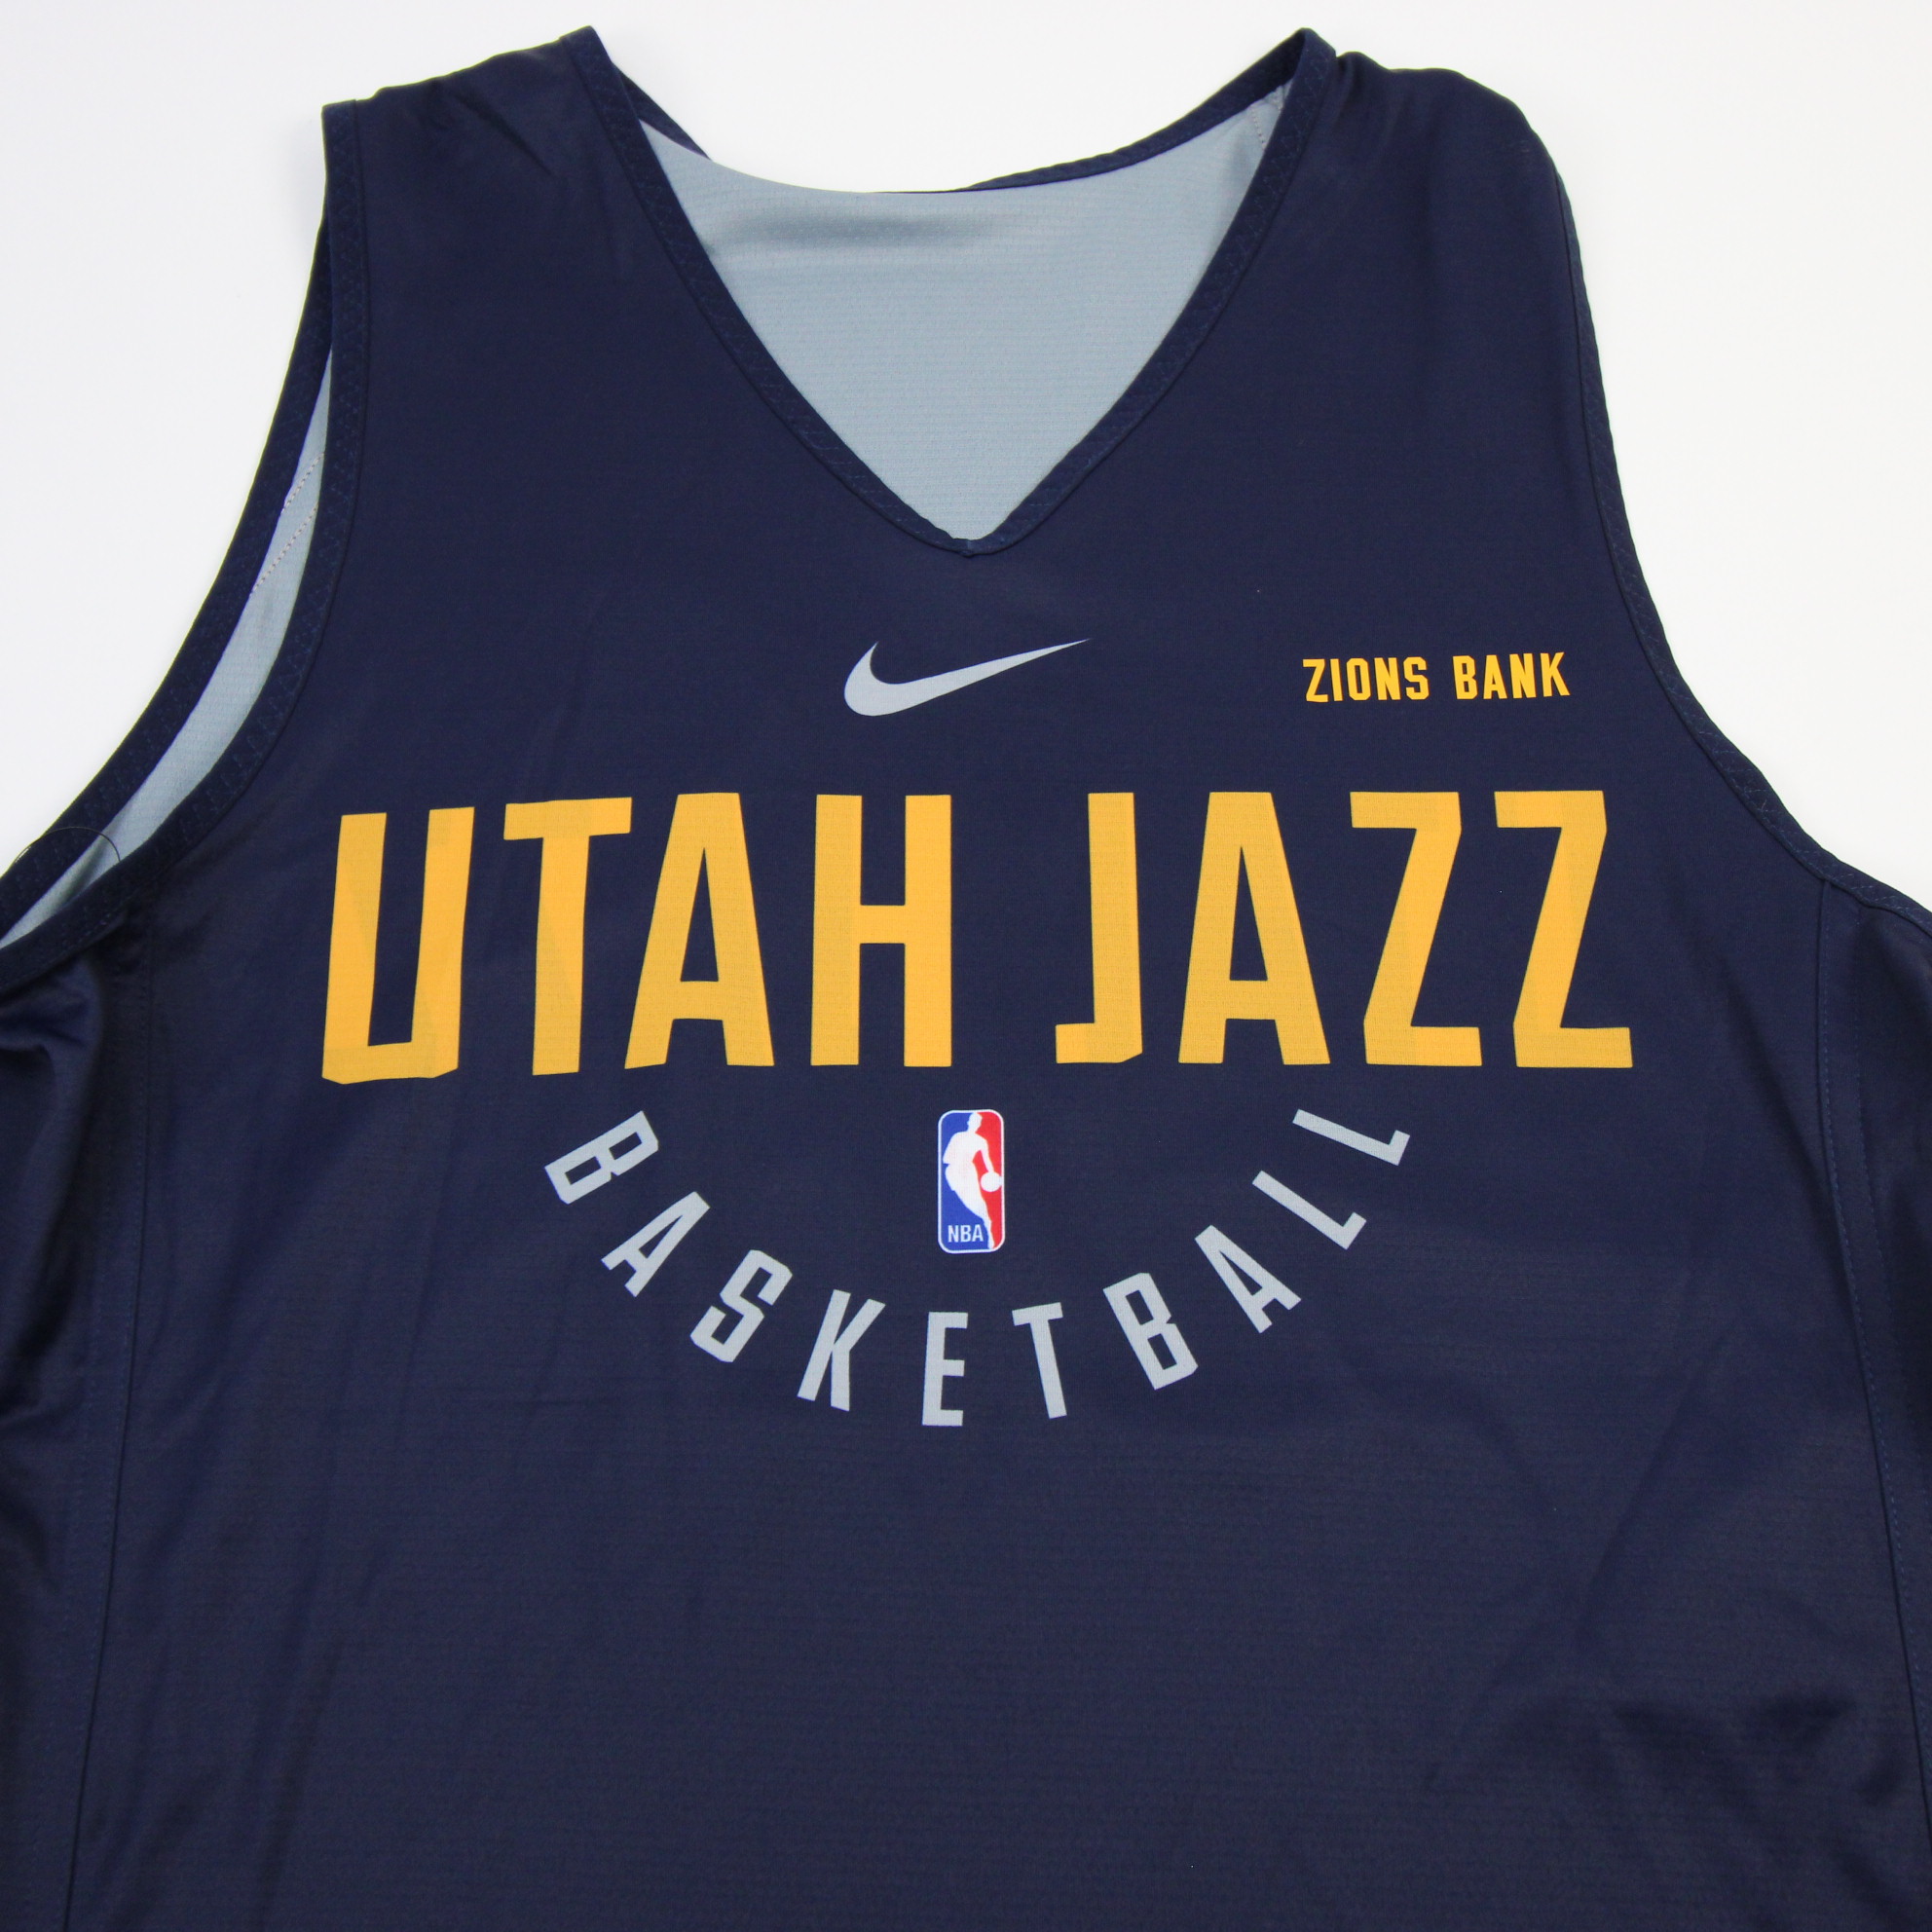 Utah Jazz Nike NBA Authentics Practice Jersey - Basketball Men's New